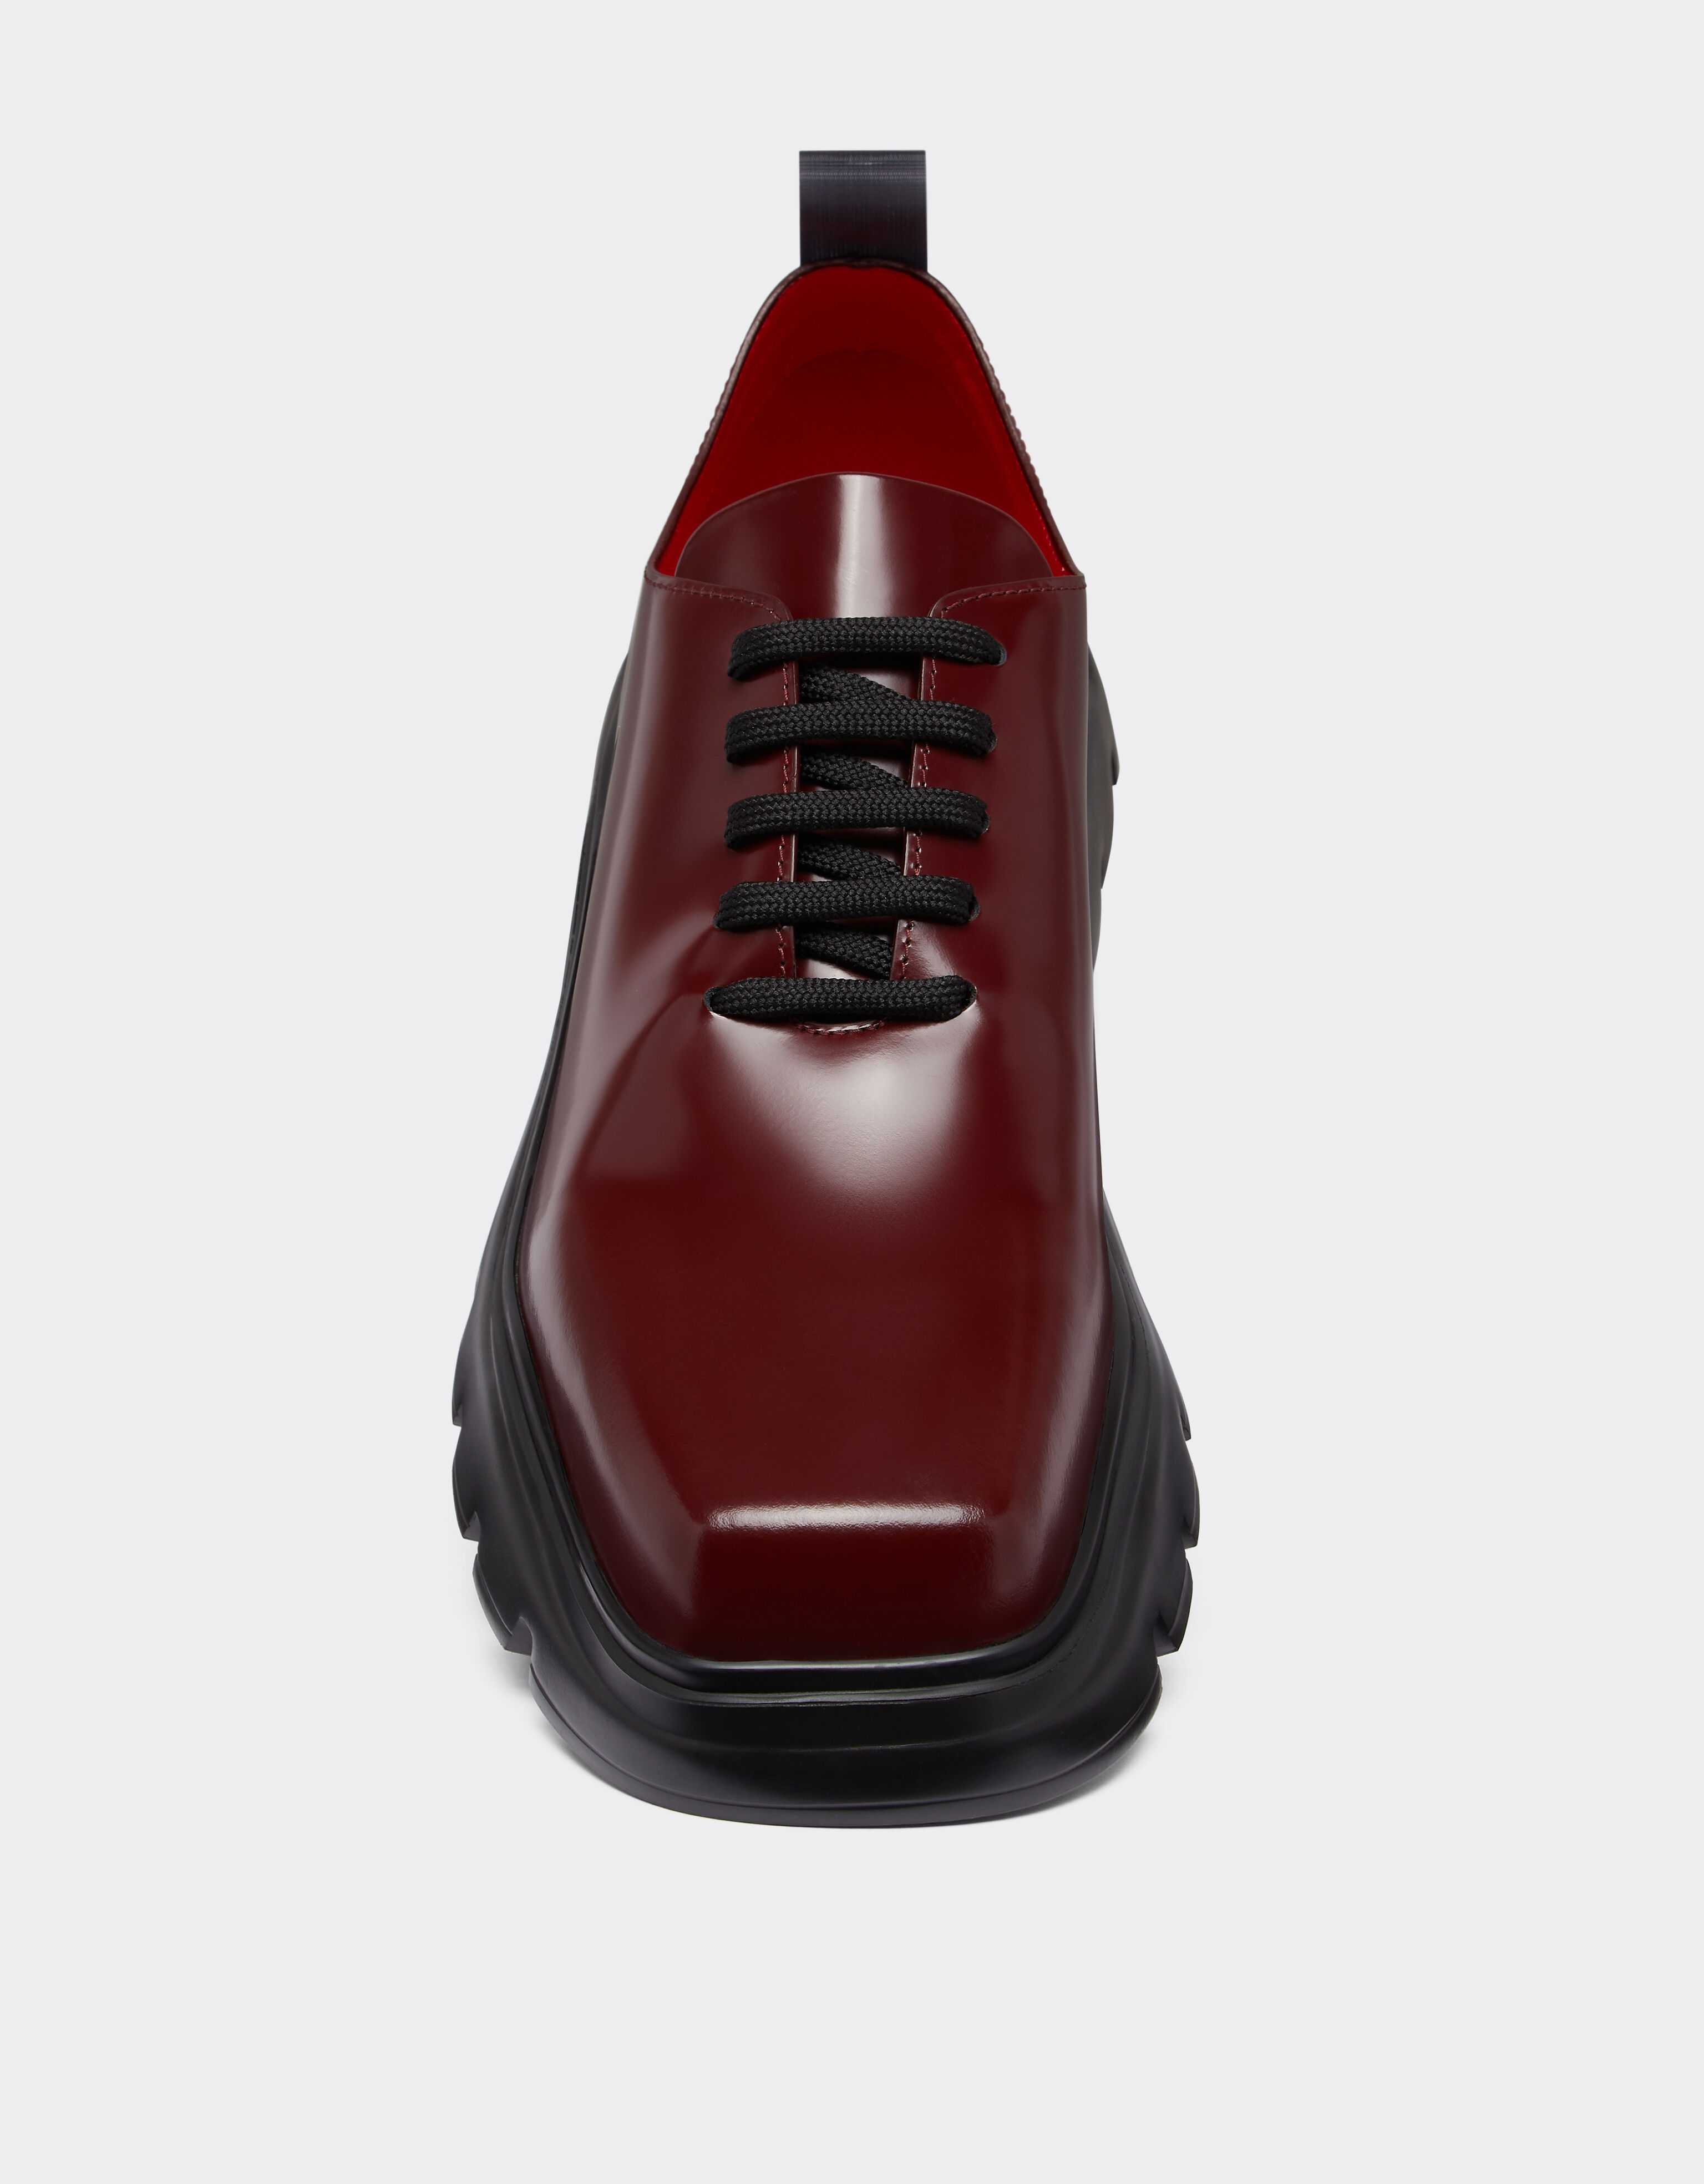 Ferrari Derby shoes in smooth leather Burgundy 20667f